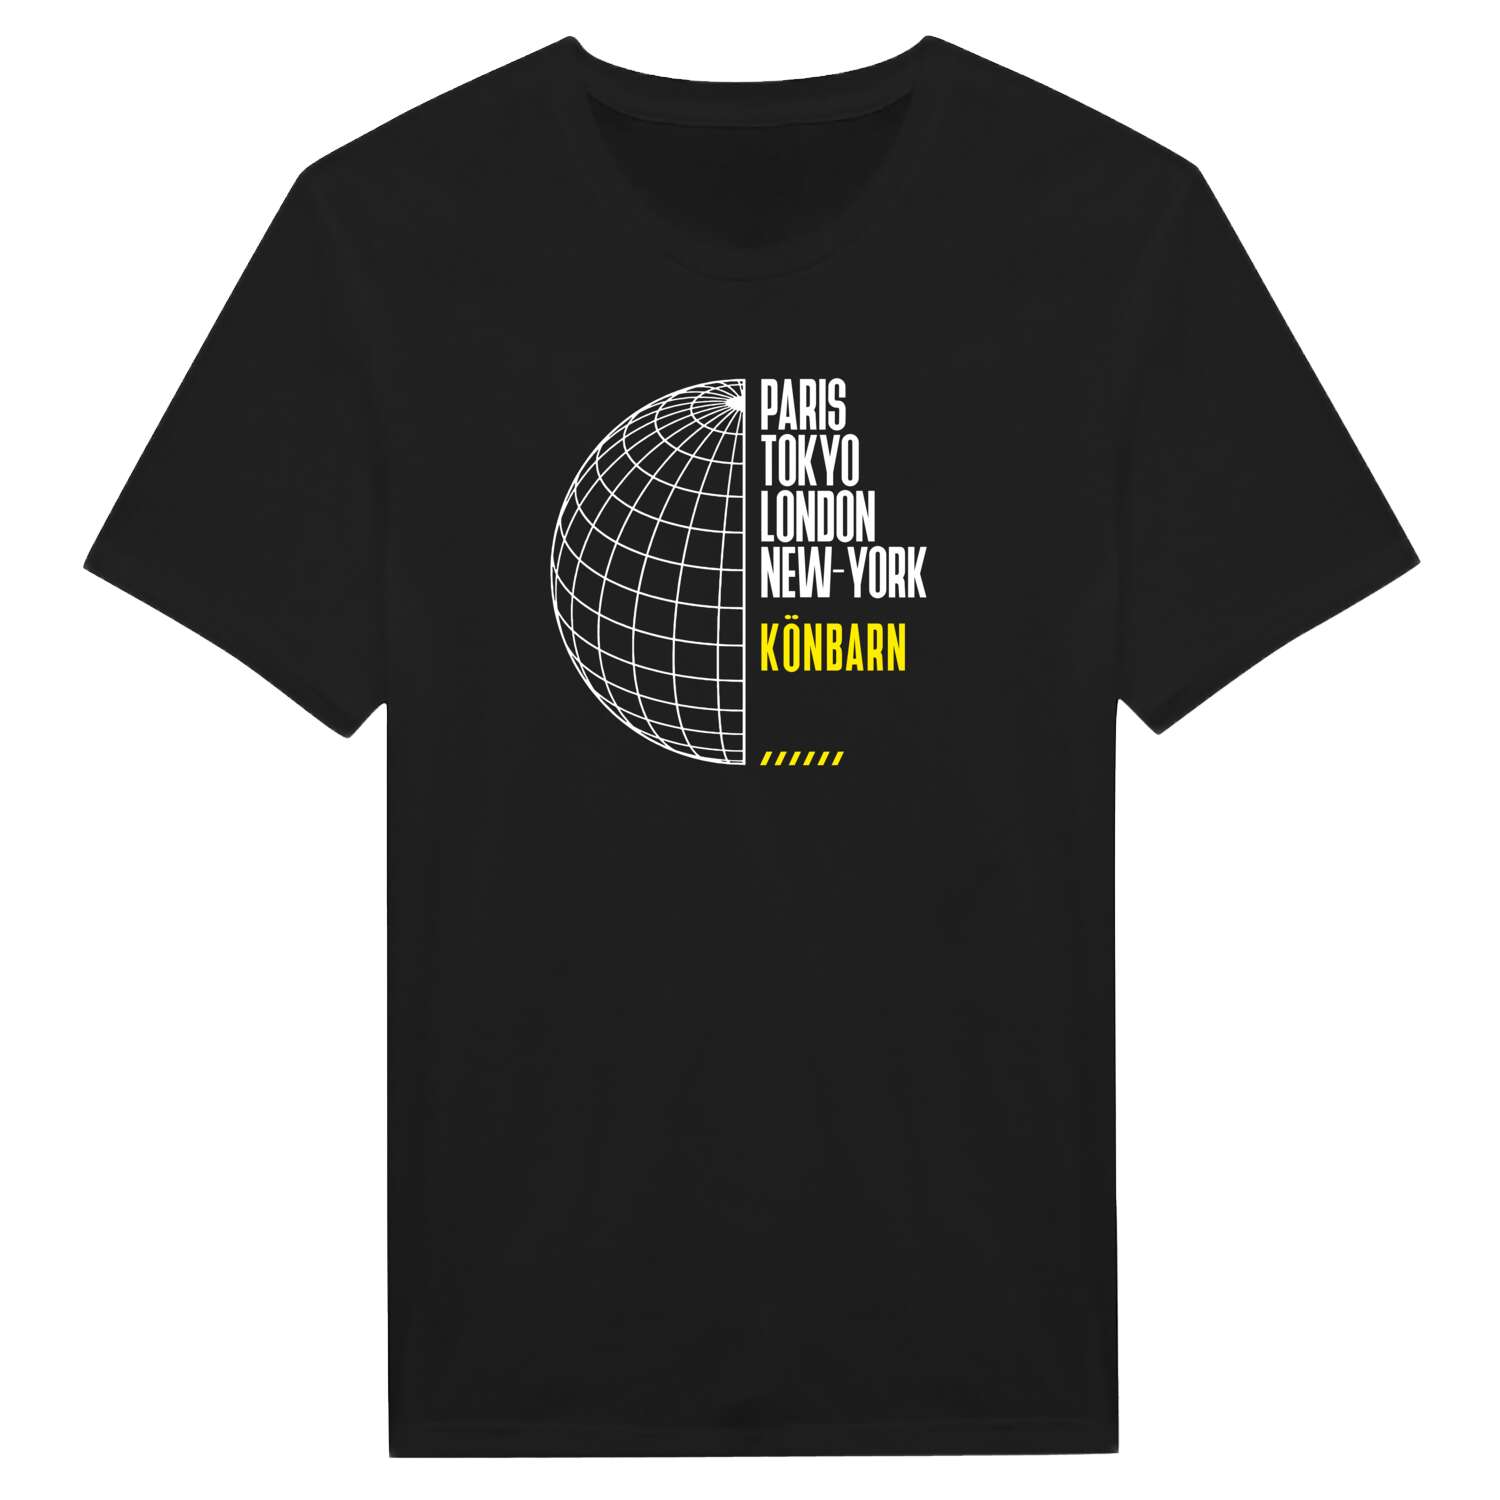 Könbarn T-Shirt »Paris Tokyo London«